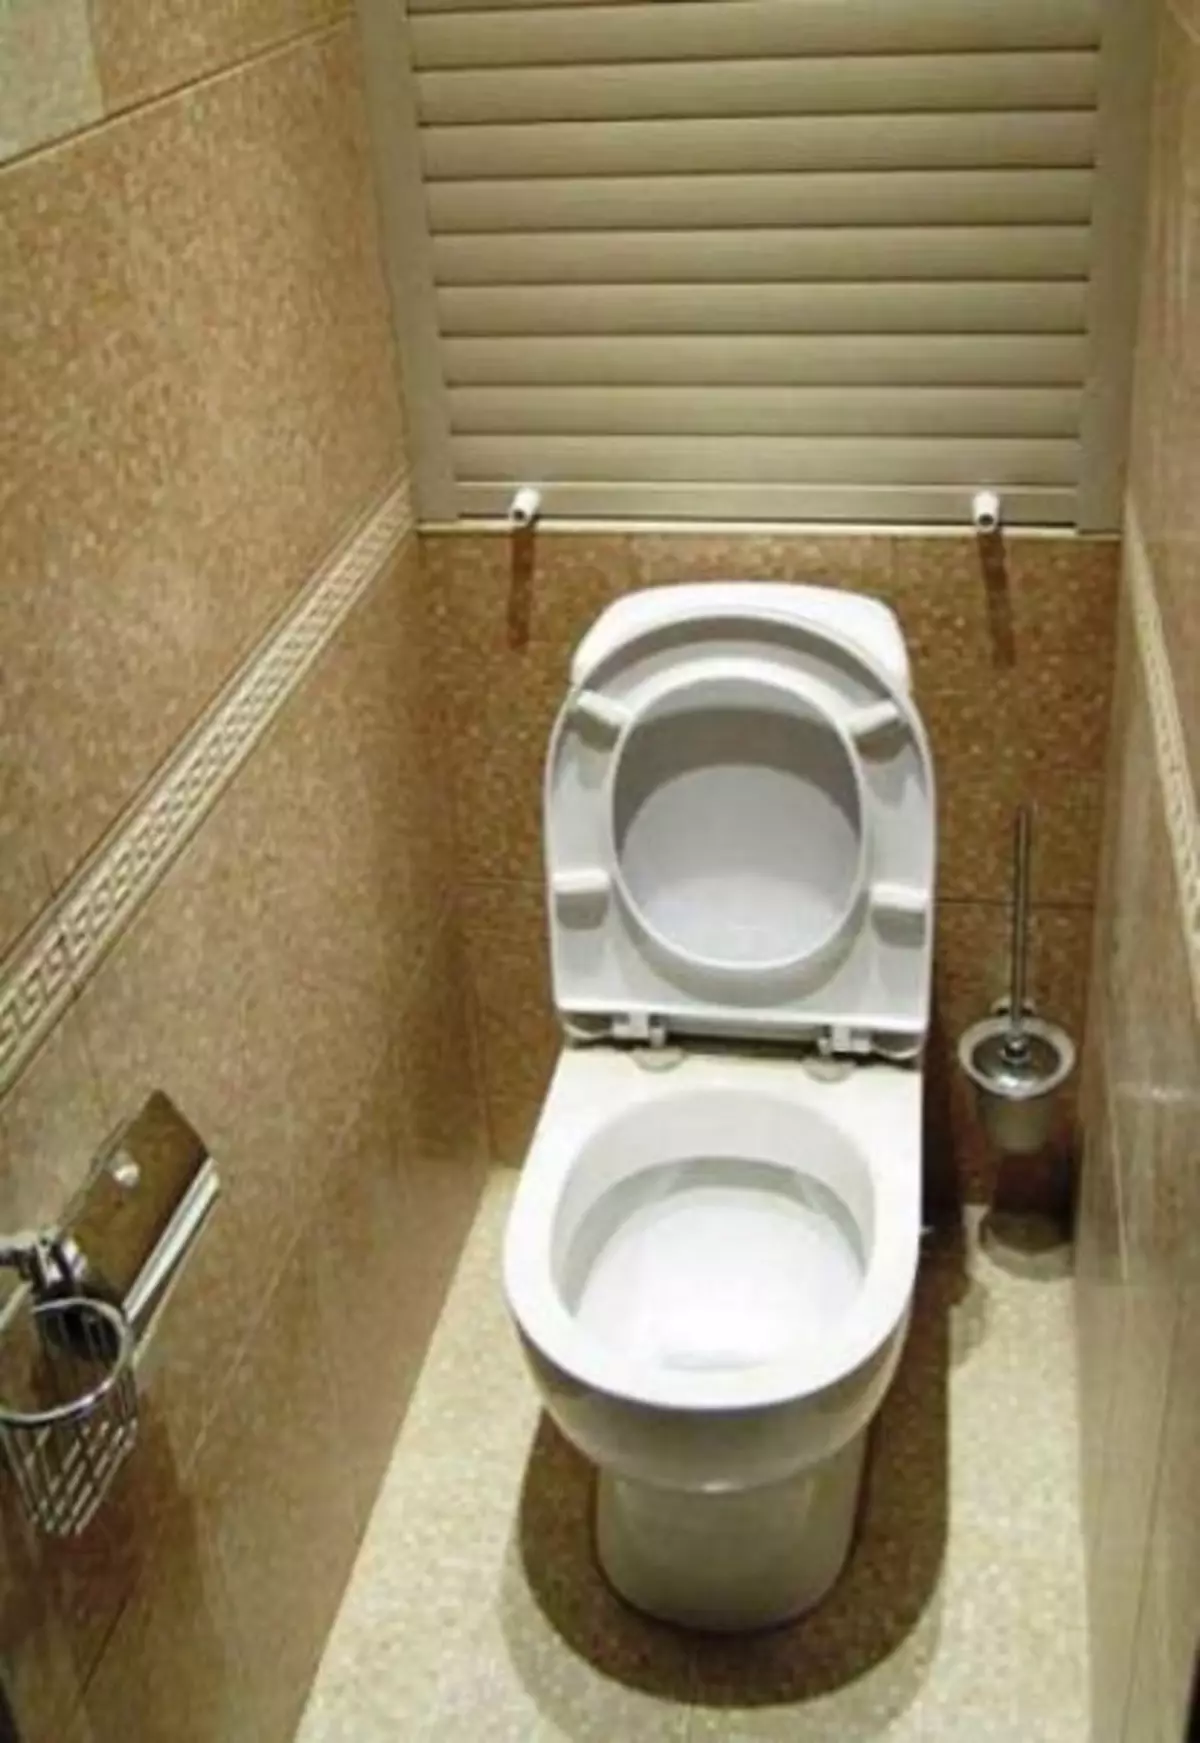 Toilet design: Develop the design yourself